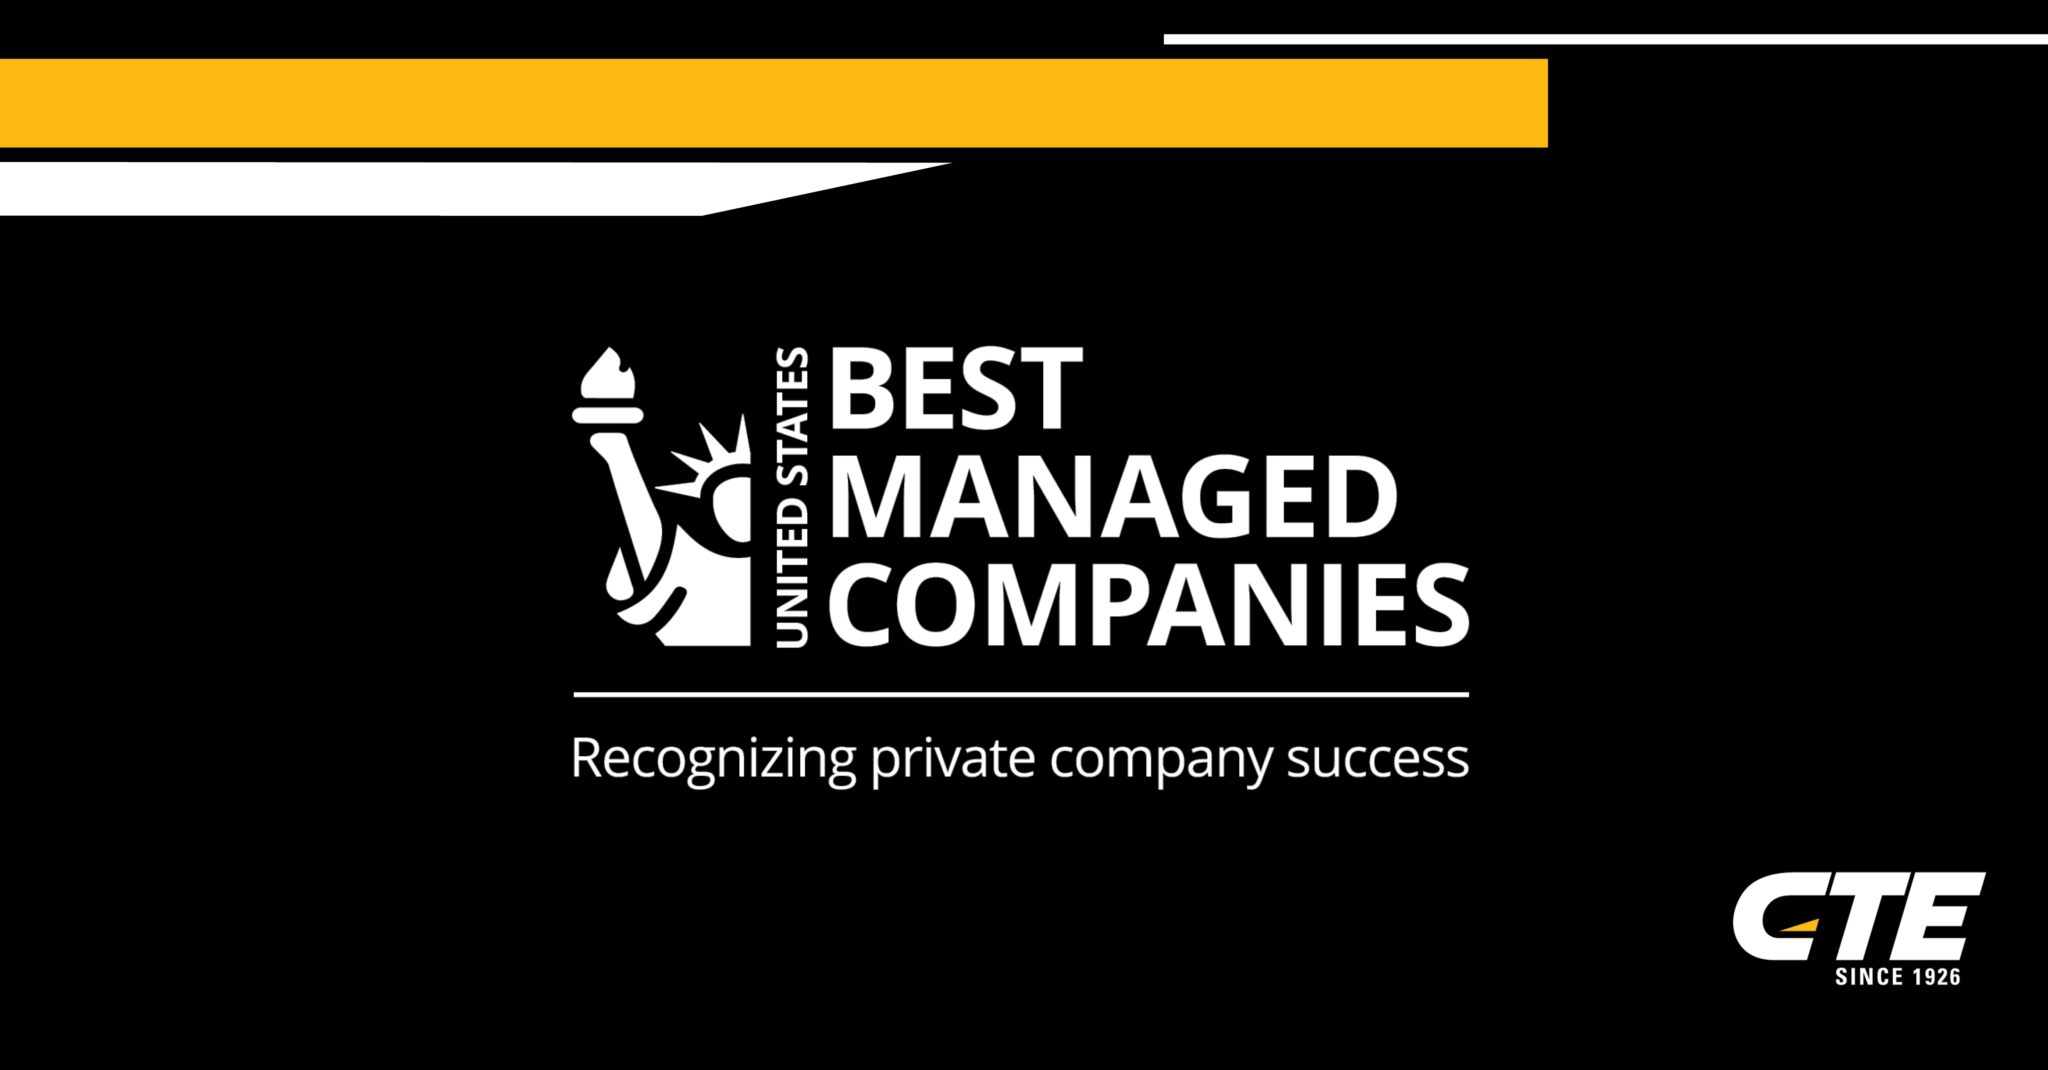 best managed companies logo